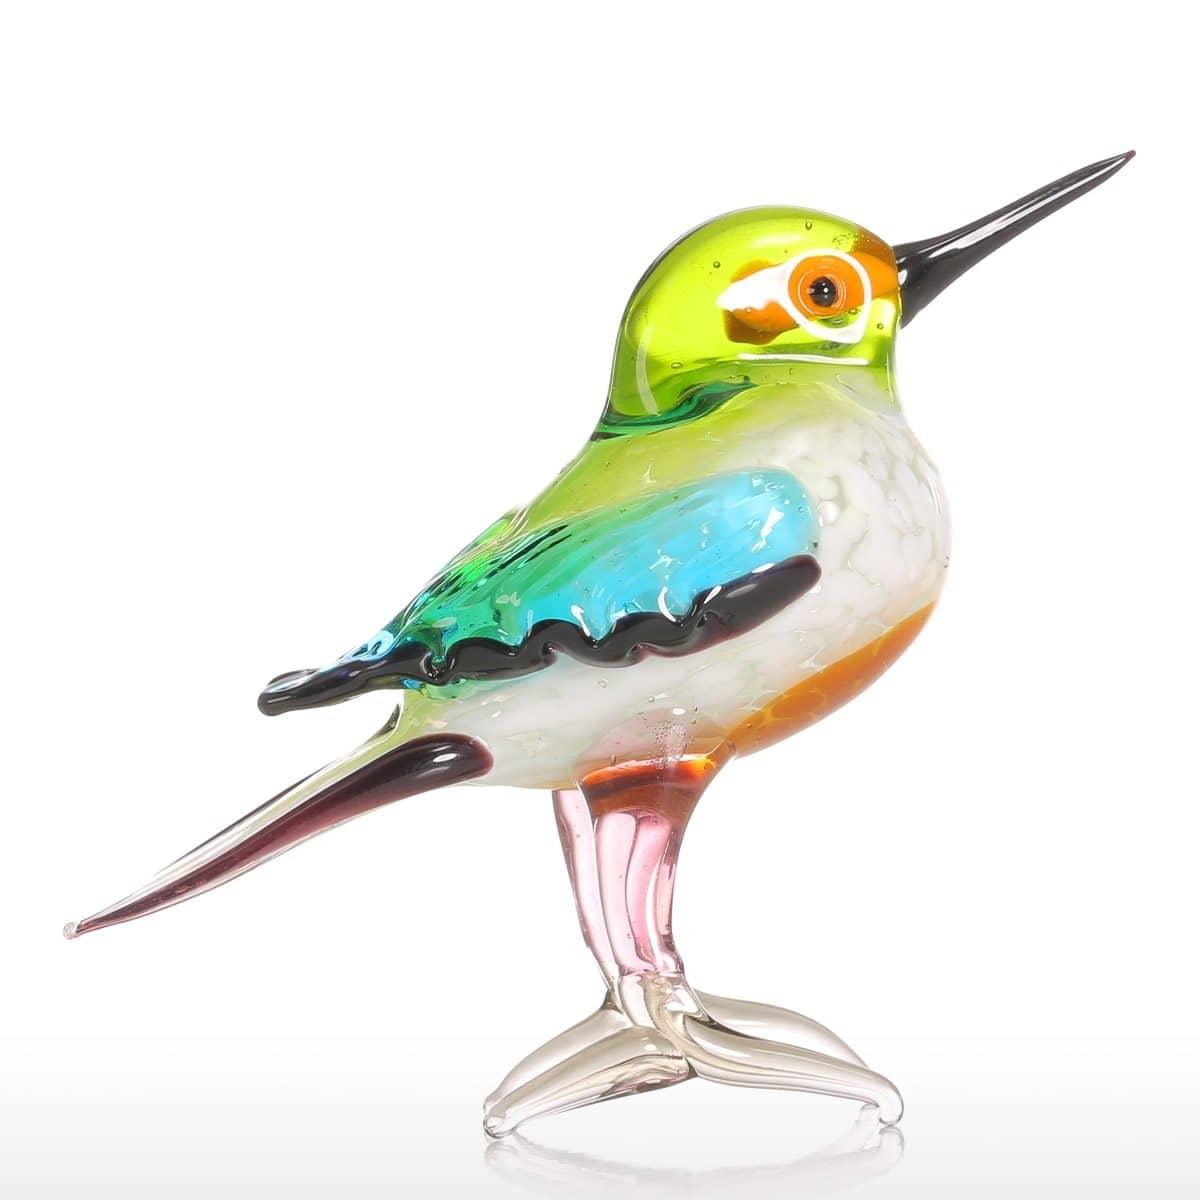 Delicate Miniature Bird Sculpture: Lifelike Details